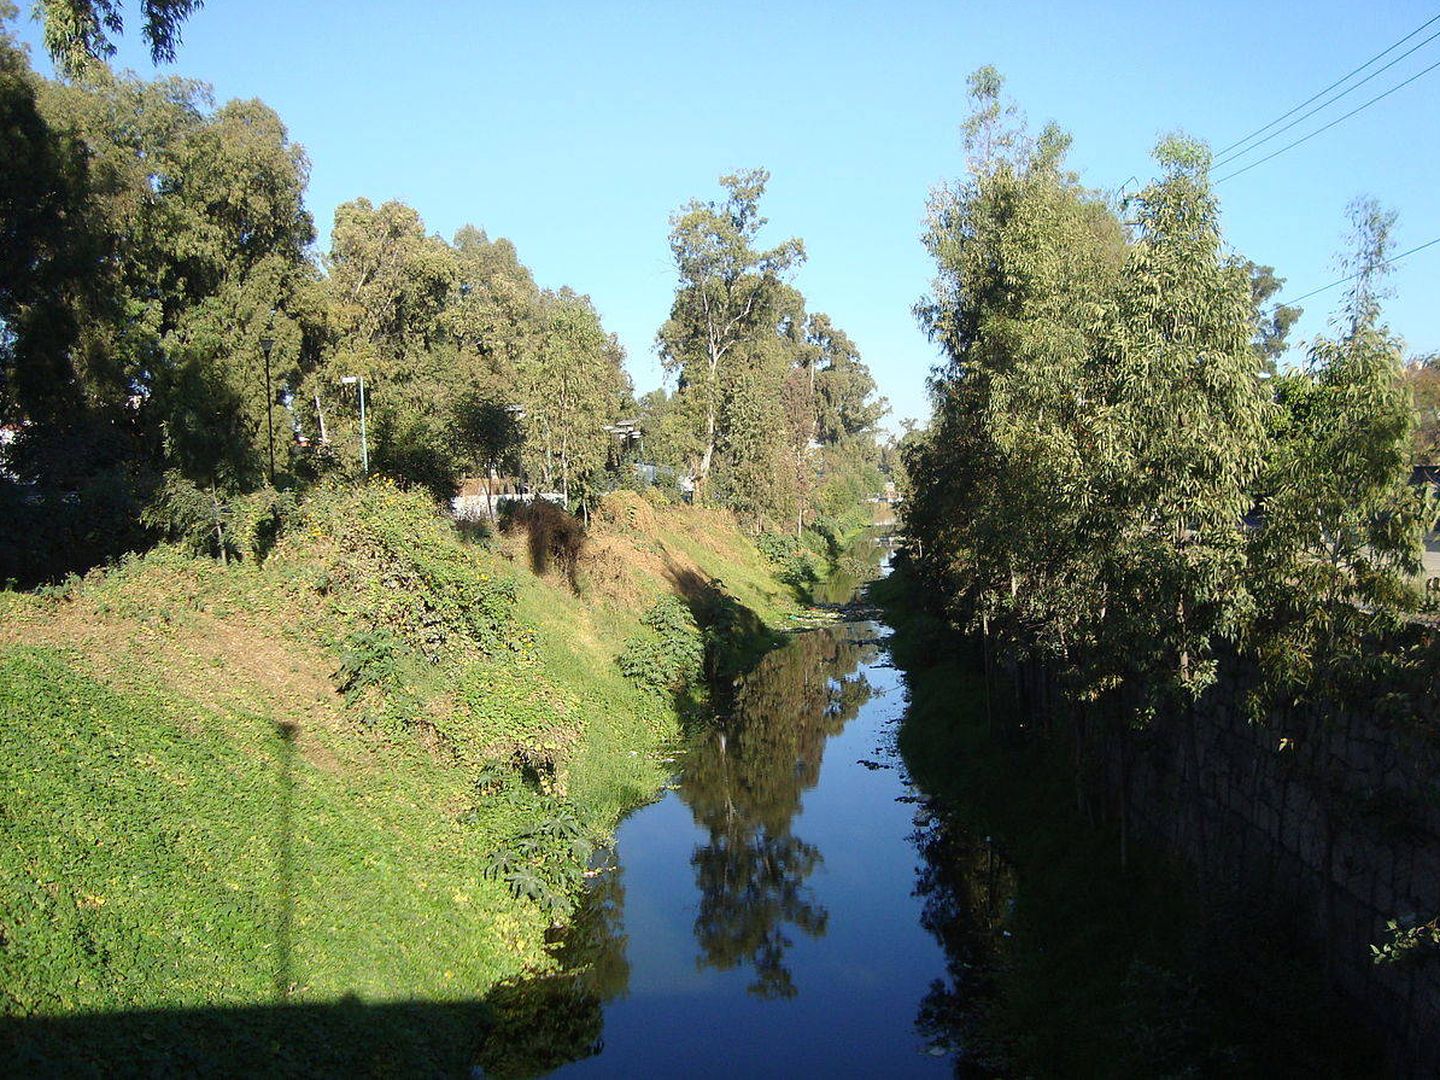 Canal Nacional de la Ciudad de México. (Wikimedia Commons)